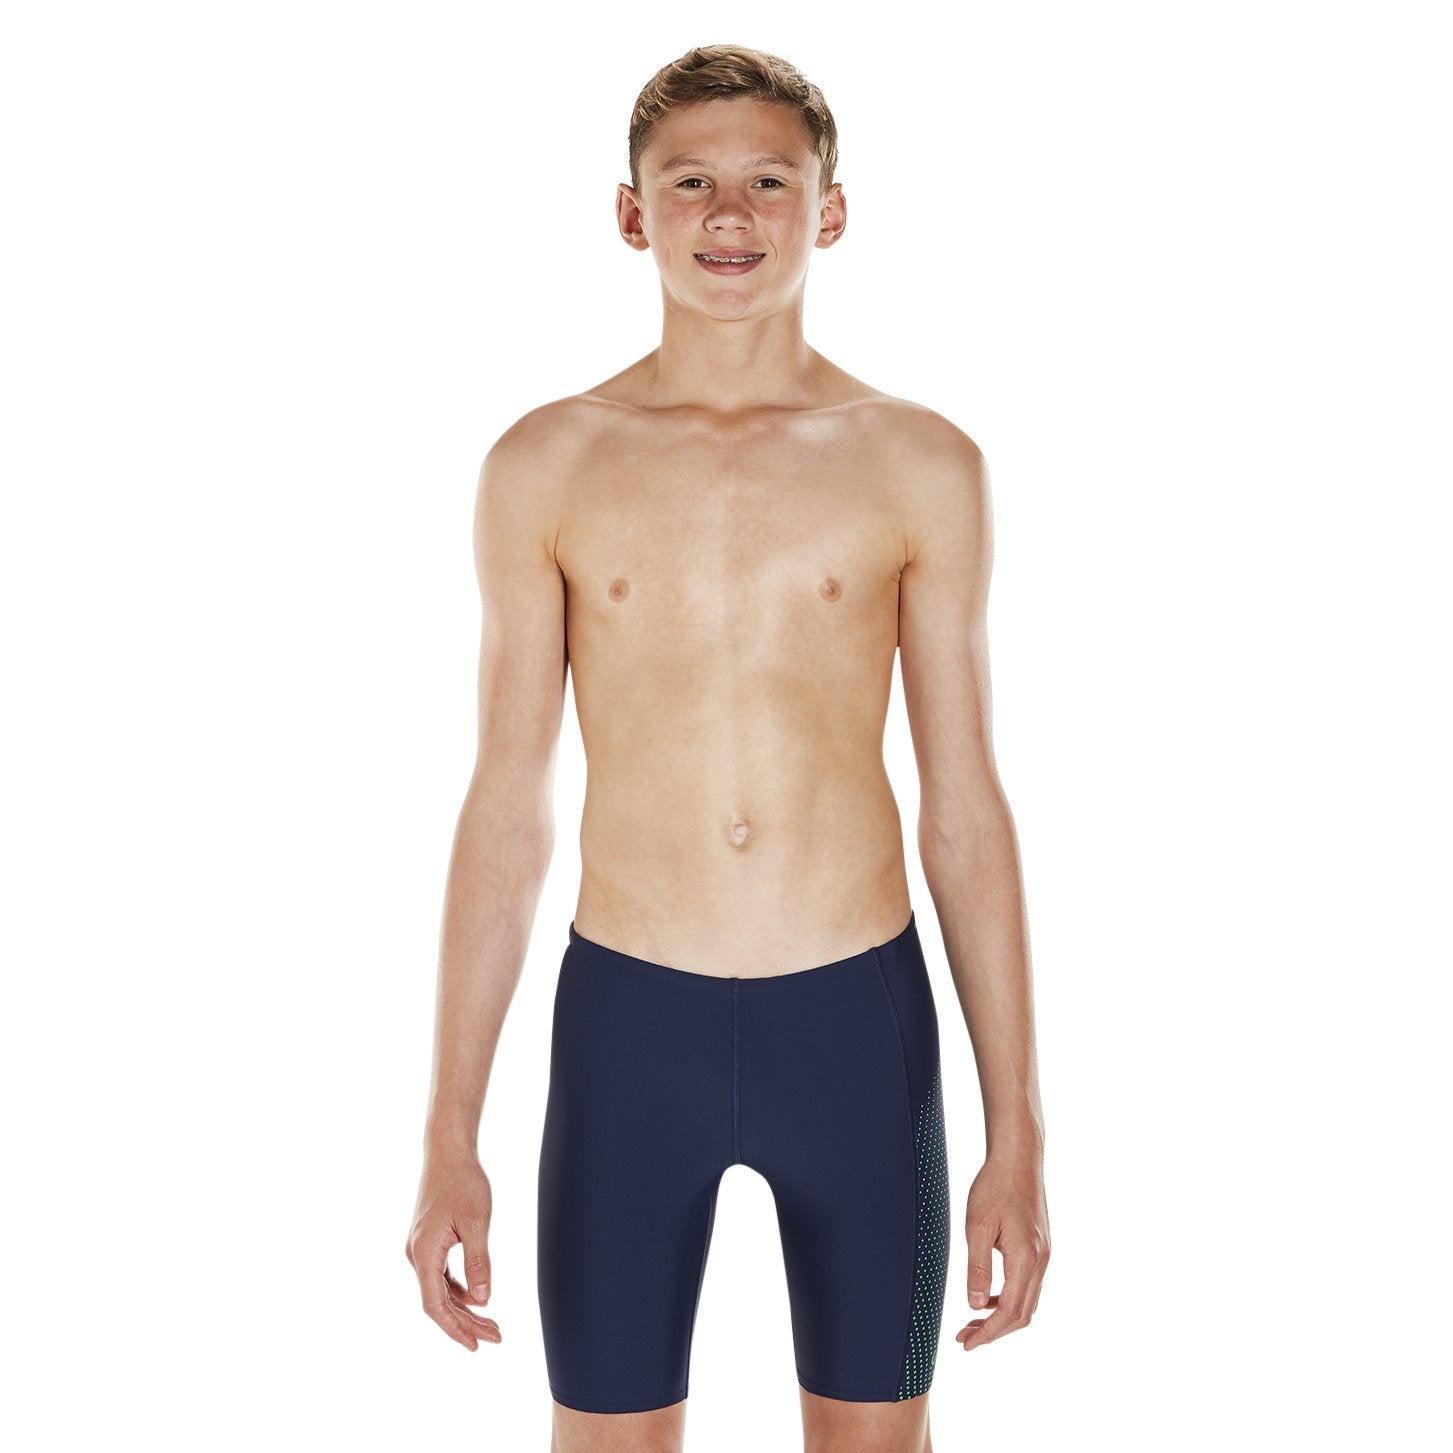 Speedo Boys Swimwear Fiesta Logo Panel Jammer - Best Price online Prokicksports.com